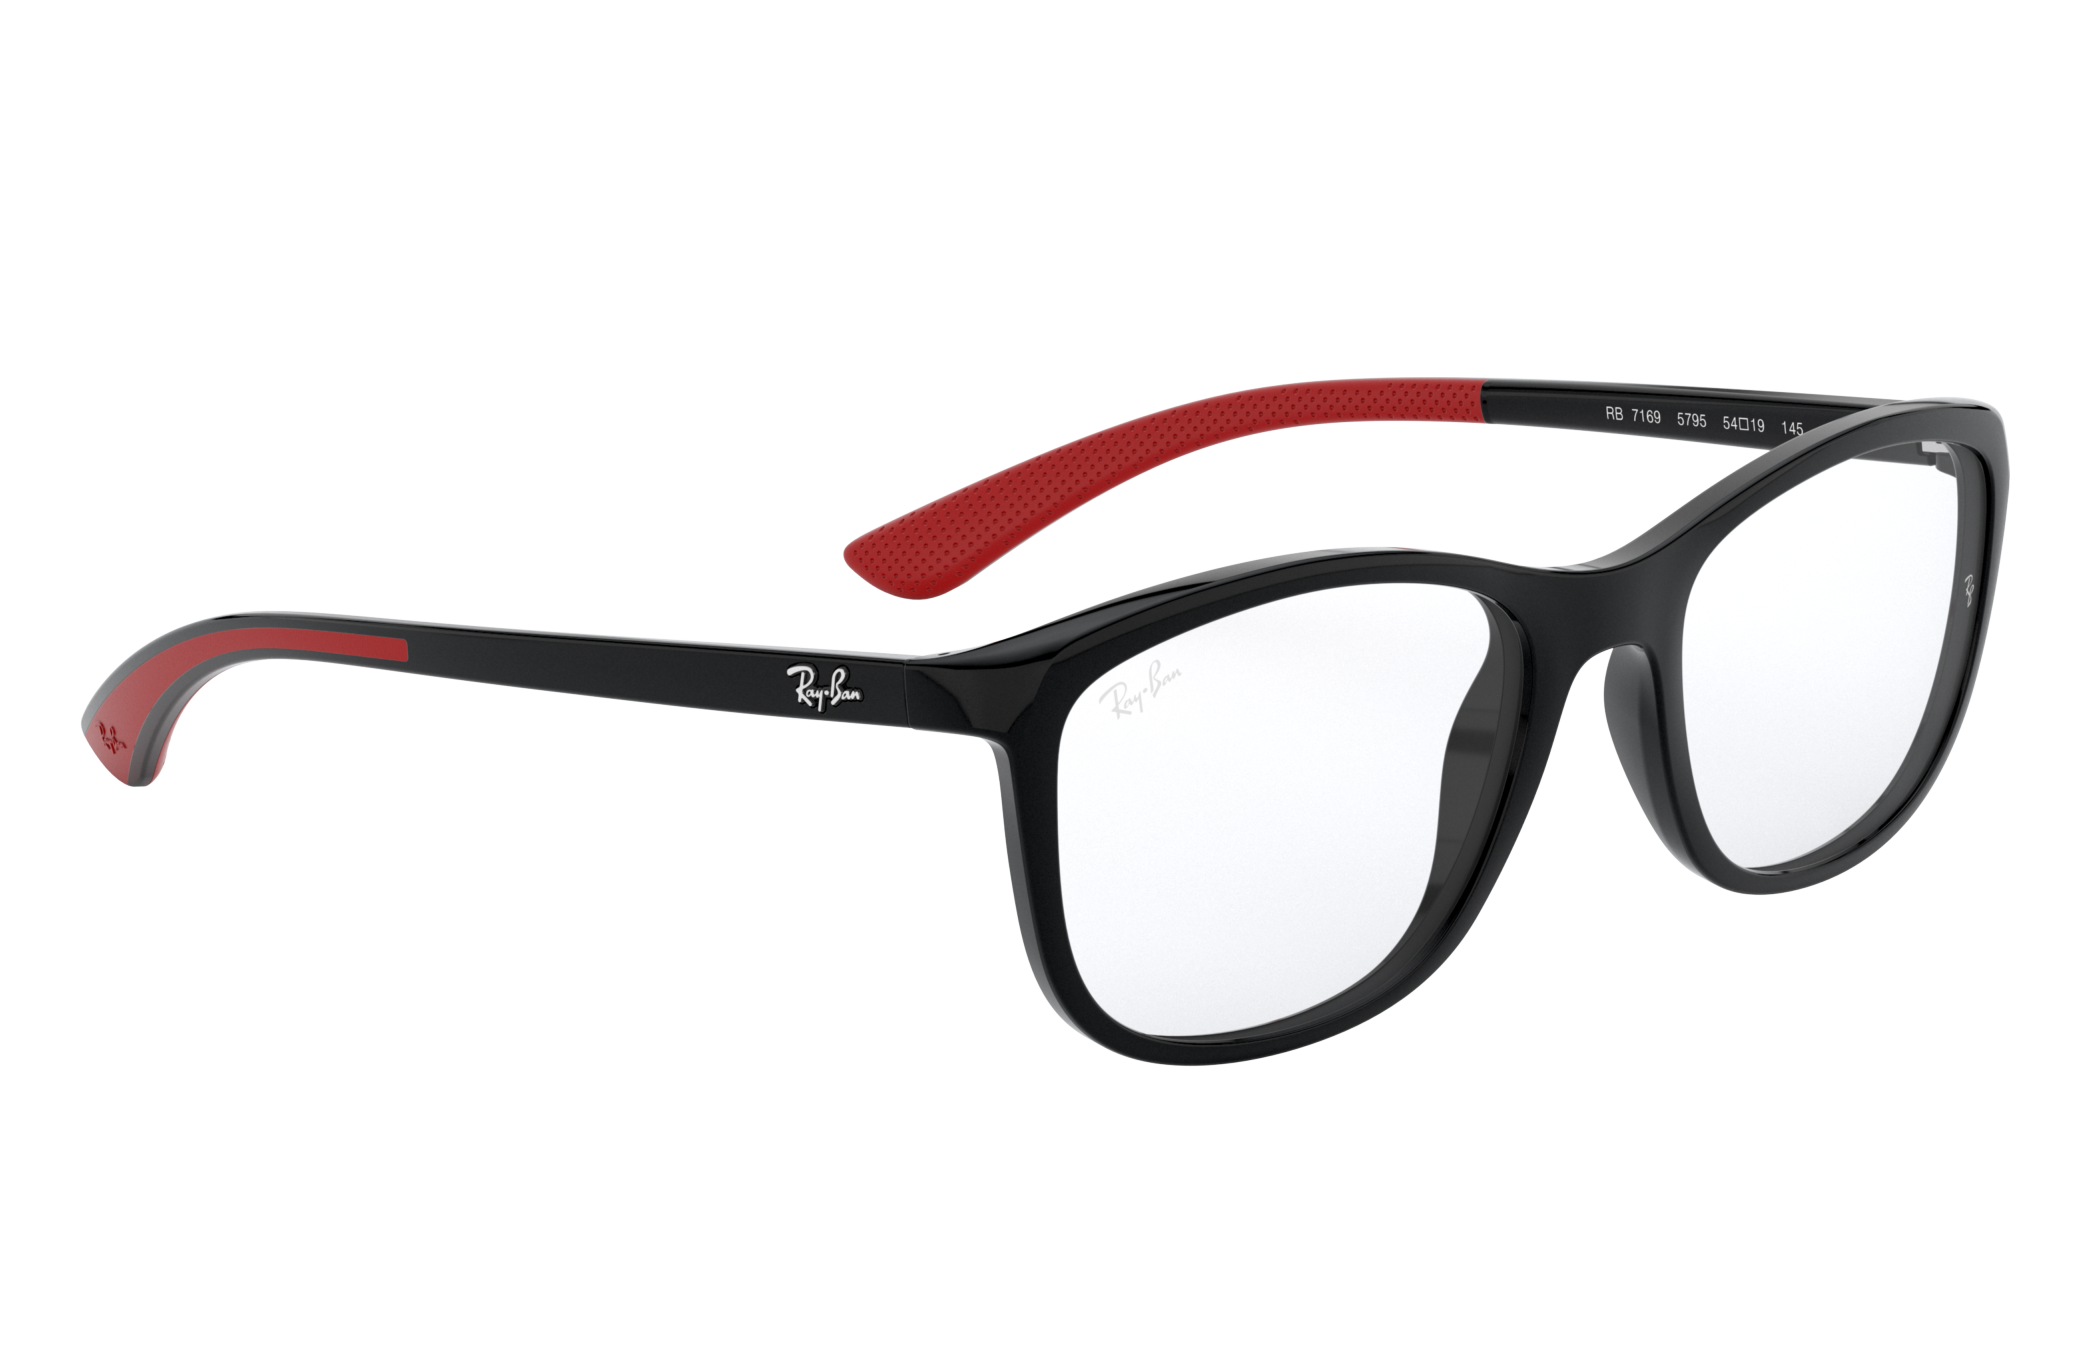 Rb7169 Optics Eyeglasses with Black Frame | Ray-Ban®